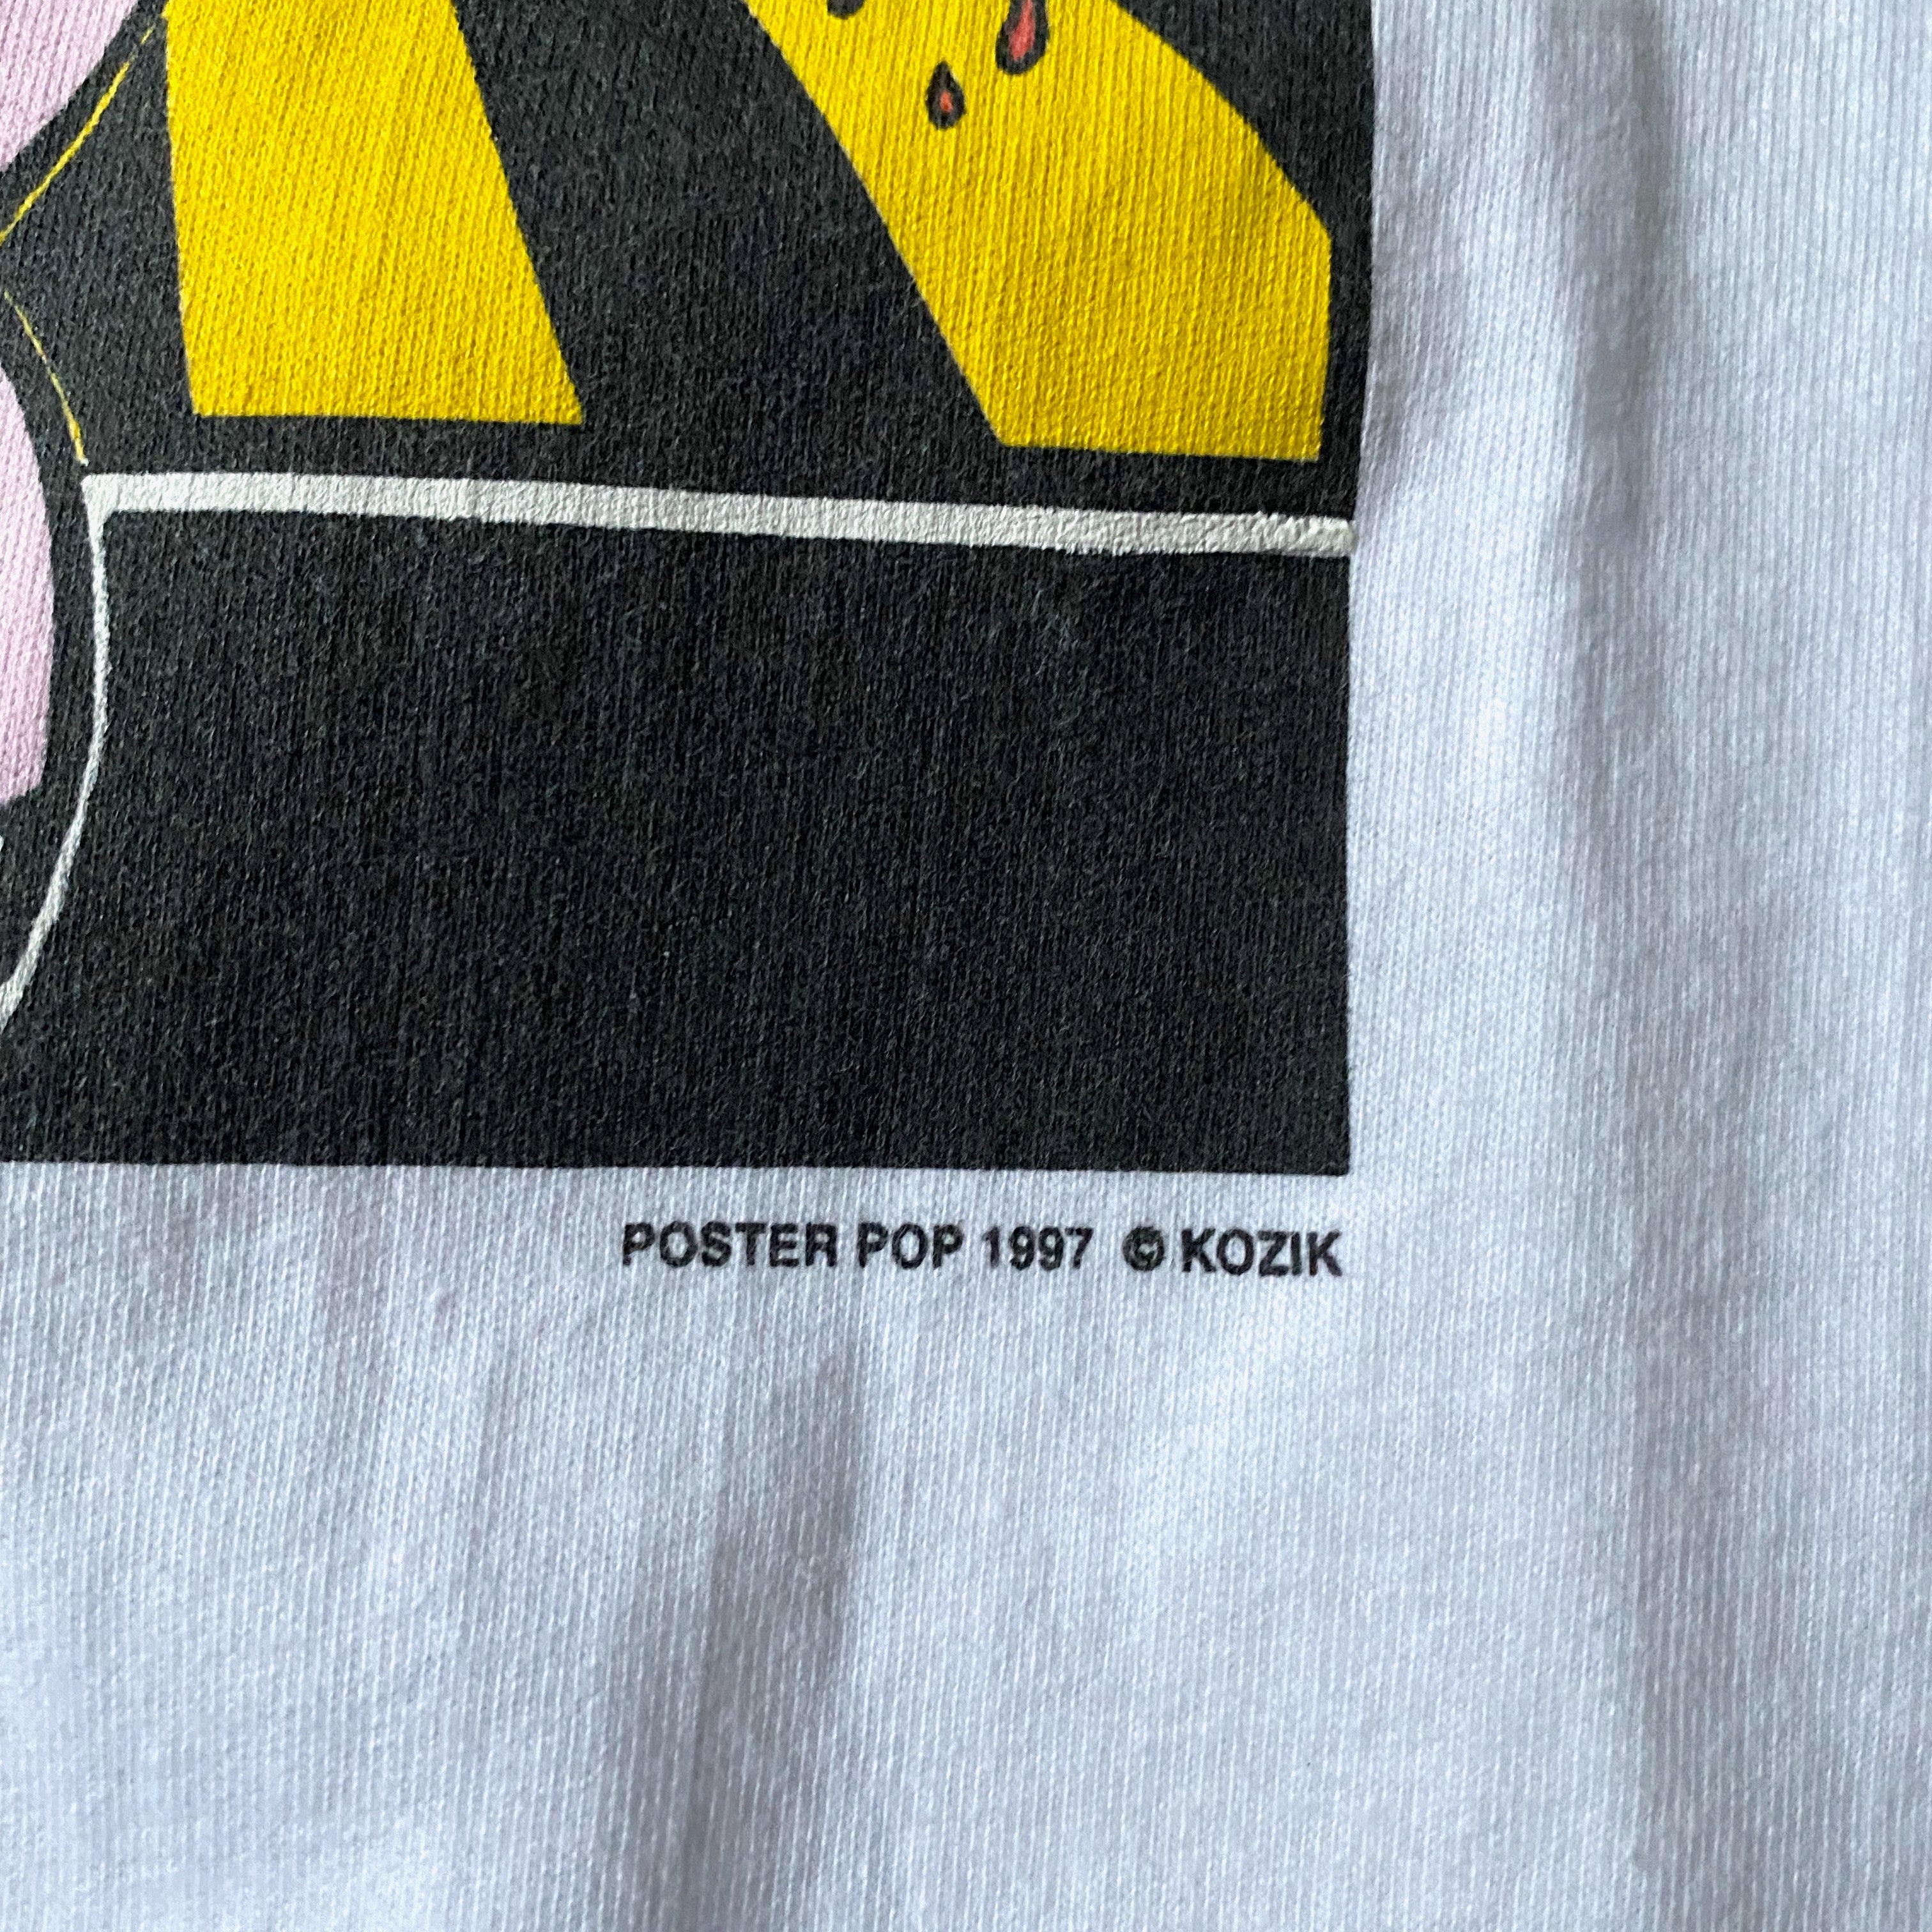 90's POSTER POP KOZIK 